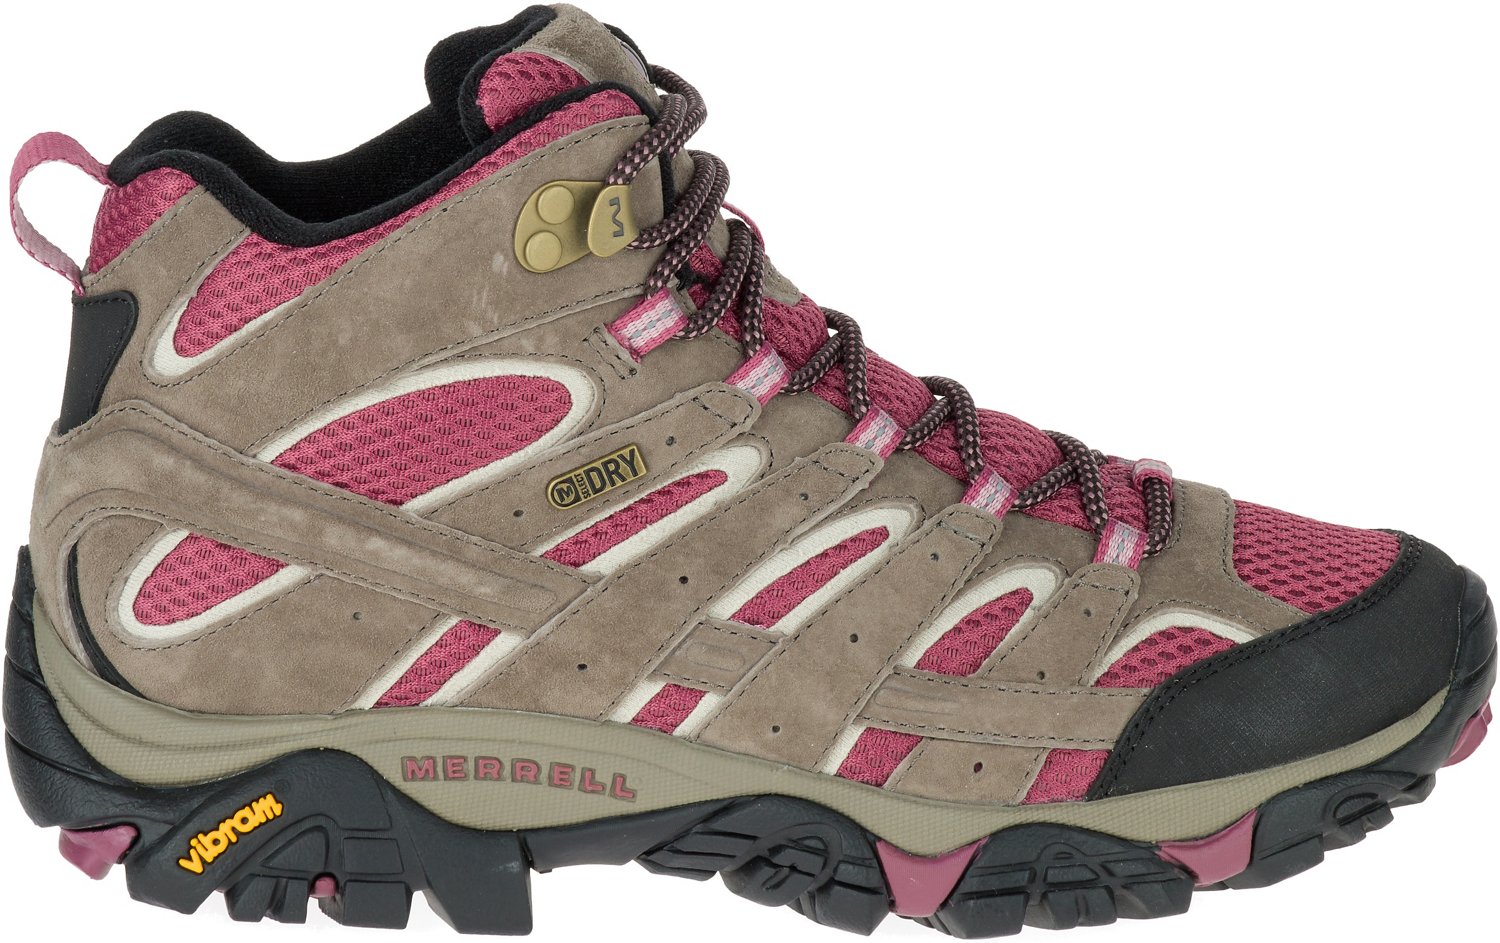 Merrell Women's Moab 2 Mid Waterproof Hiking Shoes | Academy